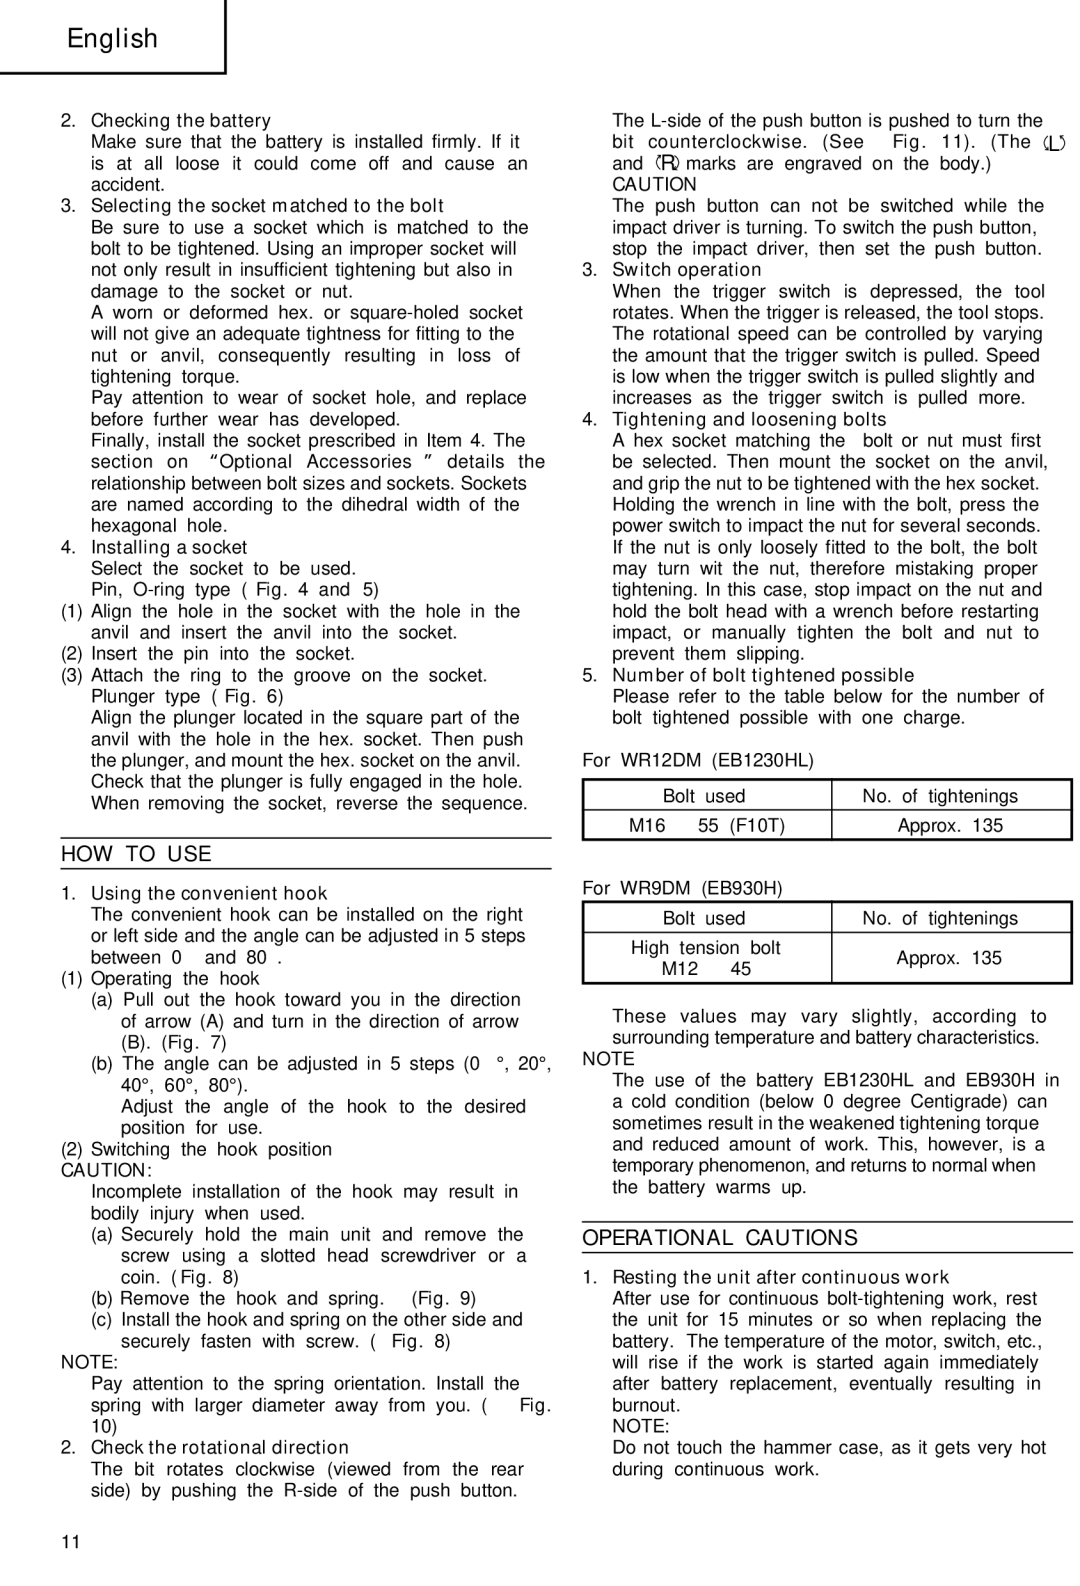 Hitachi WR 9DM, WR 12DM manual HOW to USE, Operational Cautions 